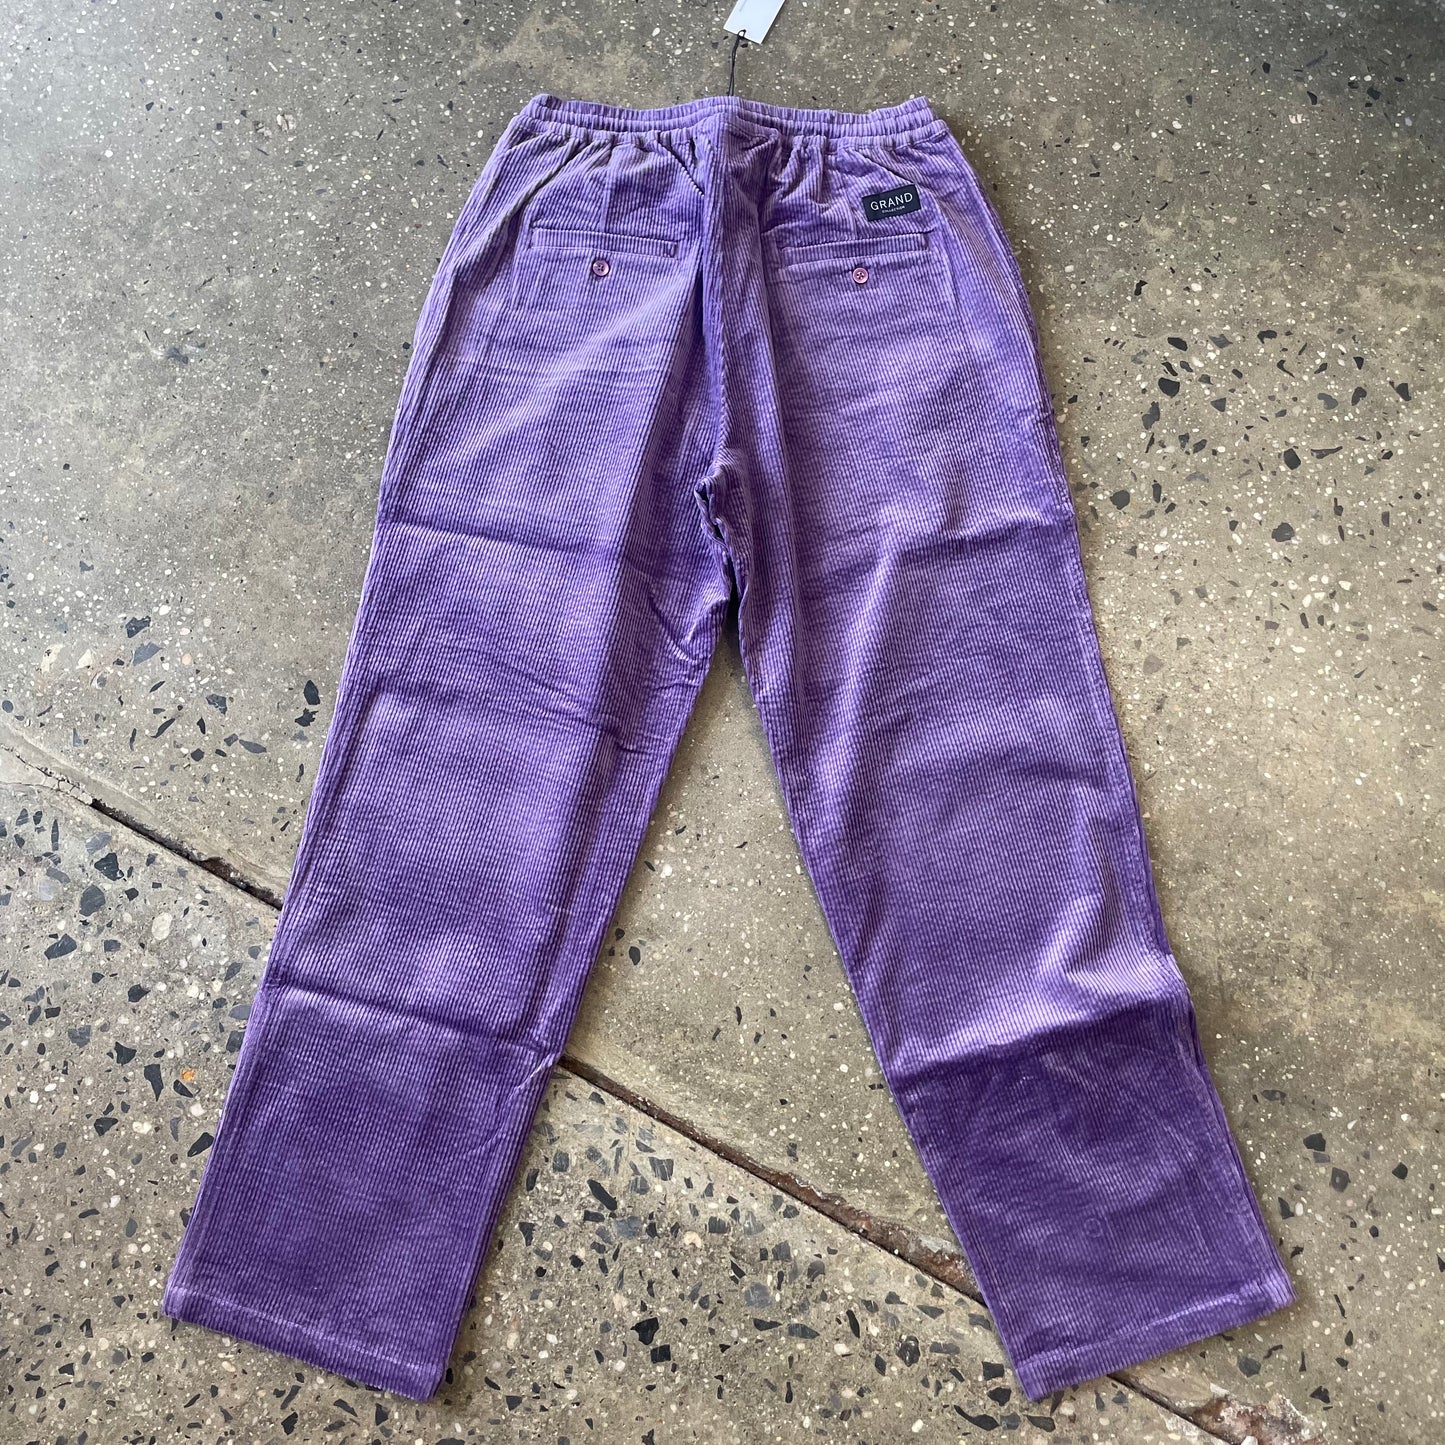 Grand Cord Pants - Violet